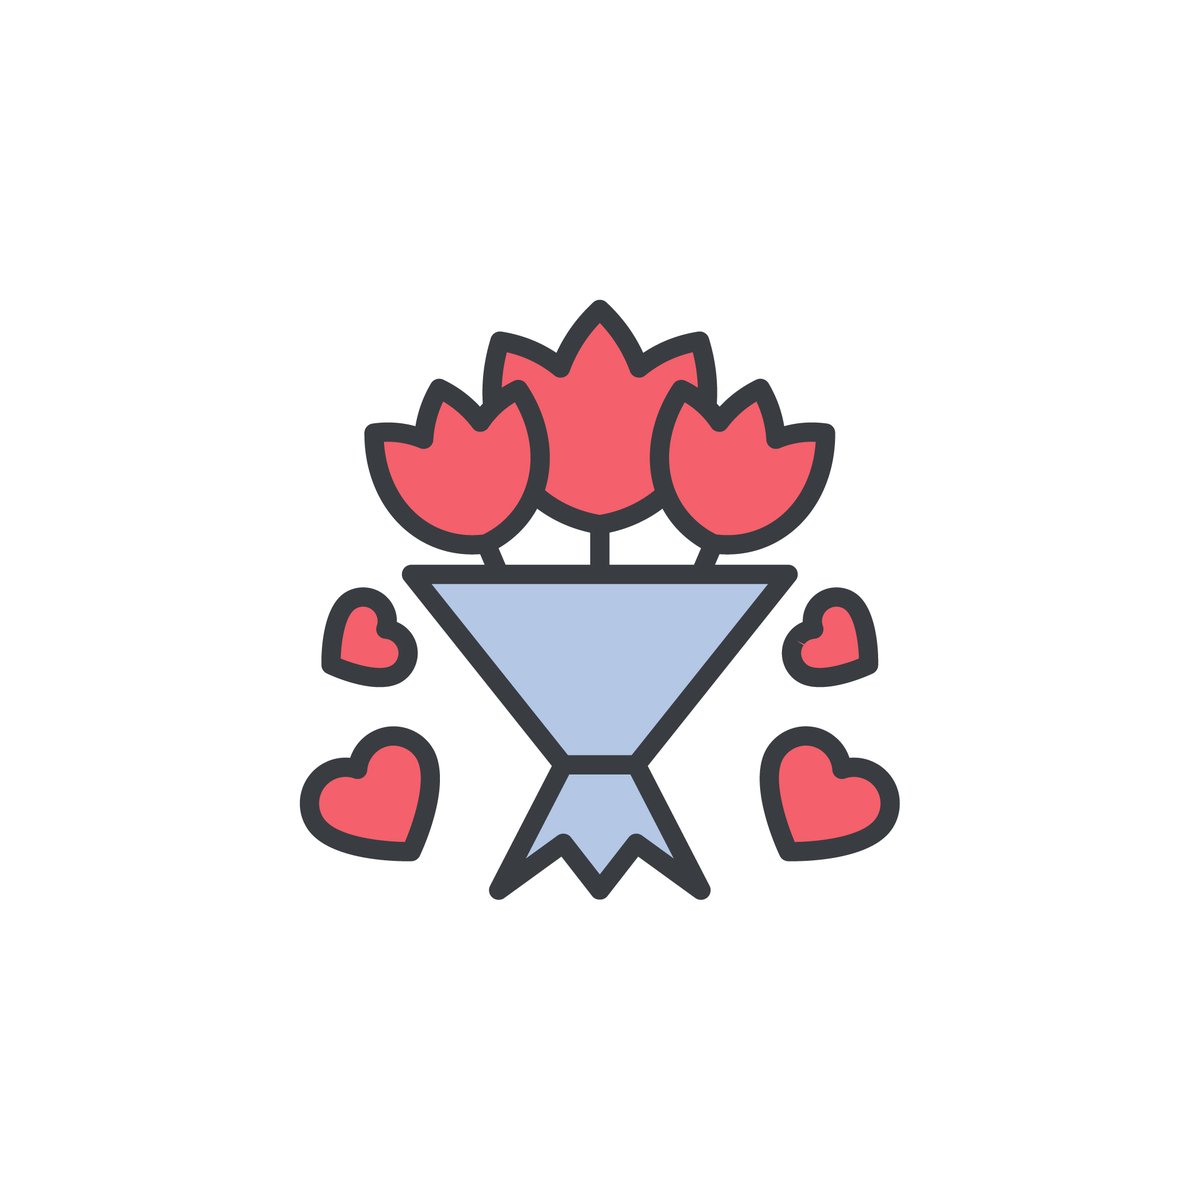 Bouquet Flowers

#twitter #TwitterX #like #follow #icon #viral #graphics #design #illustration #vector #art #vectoricon #icondesign #bouquet #flowers #valentines #valentineday #rose #purpose #anniversary #wedding #love #red 

stock.adobe.com/contributor/21…